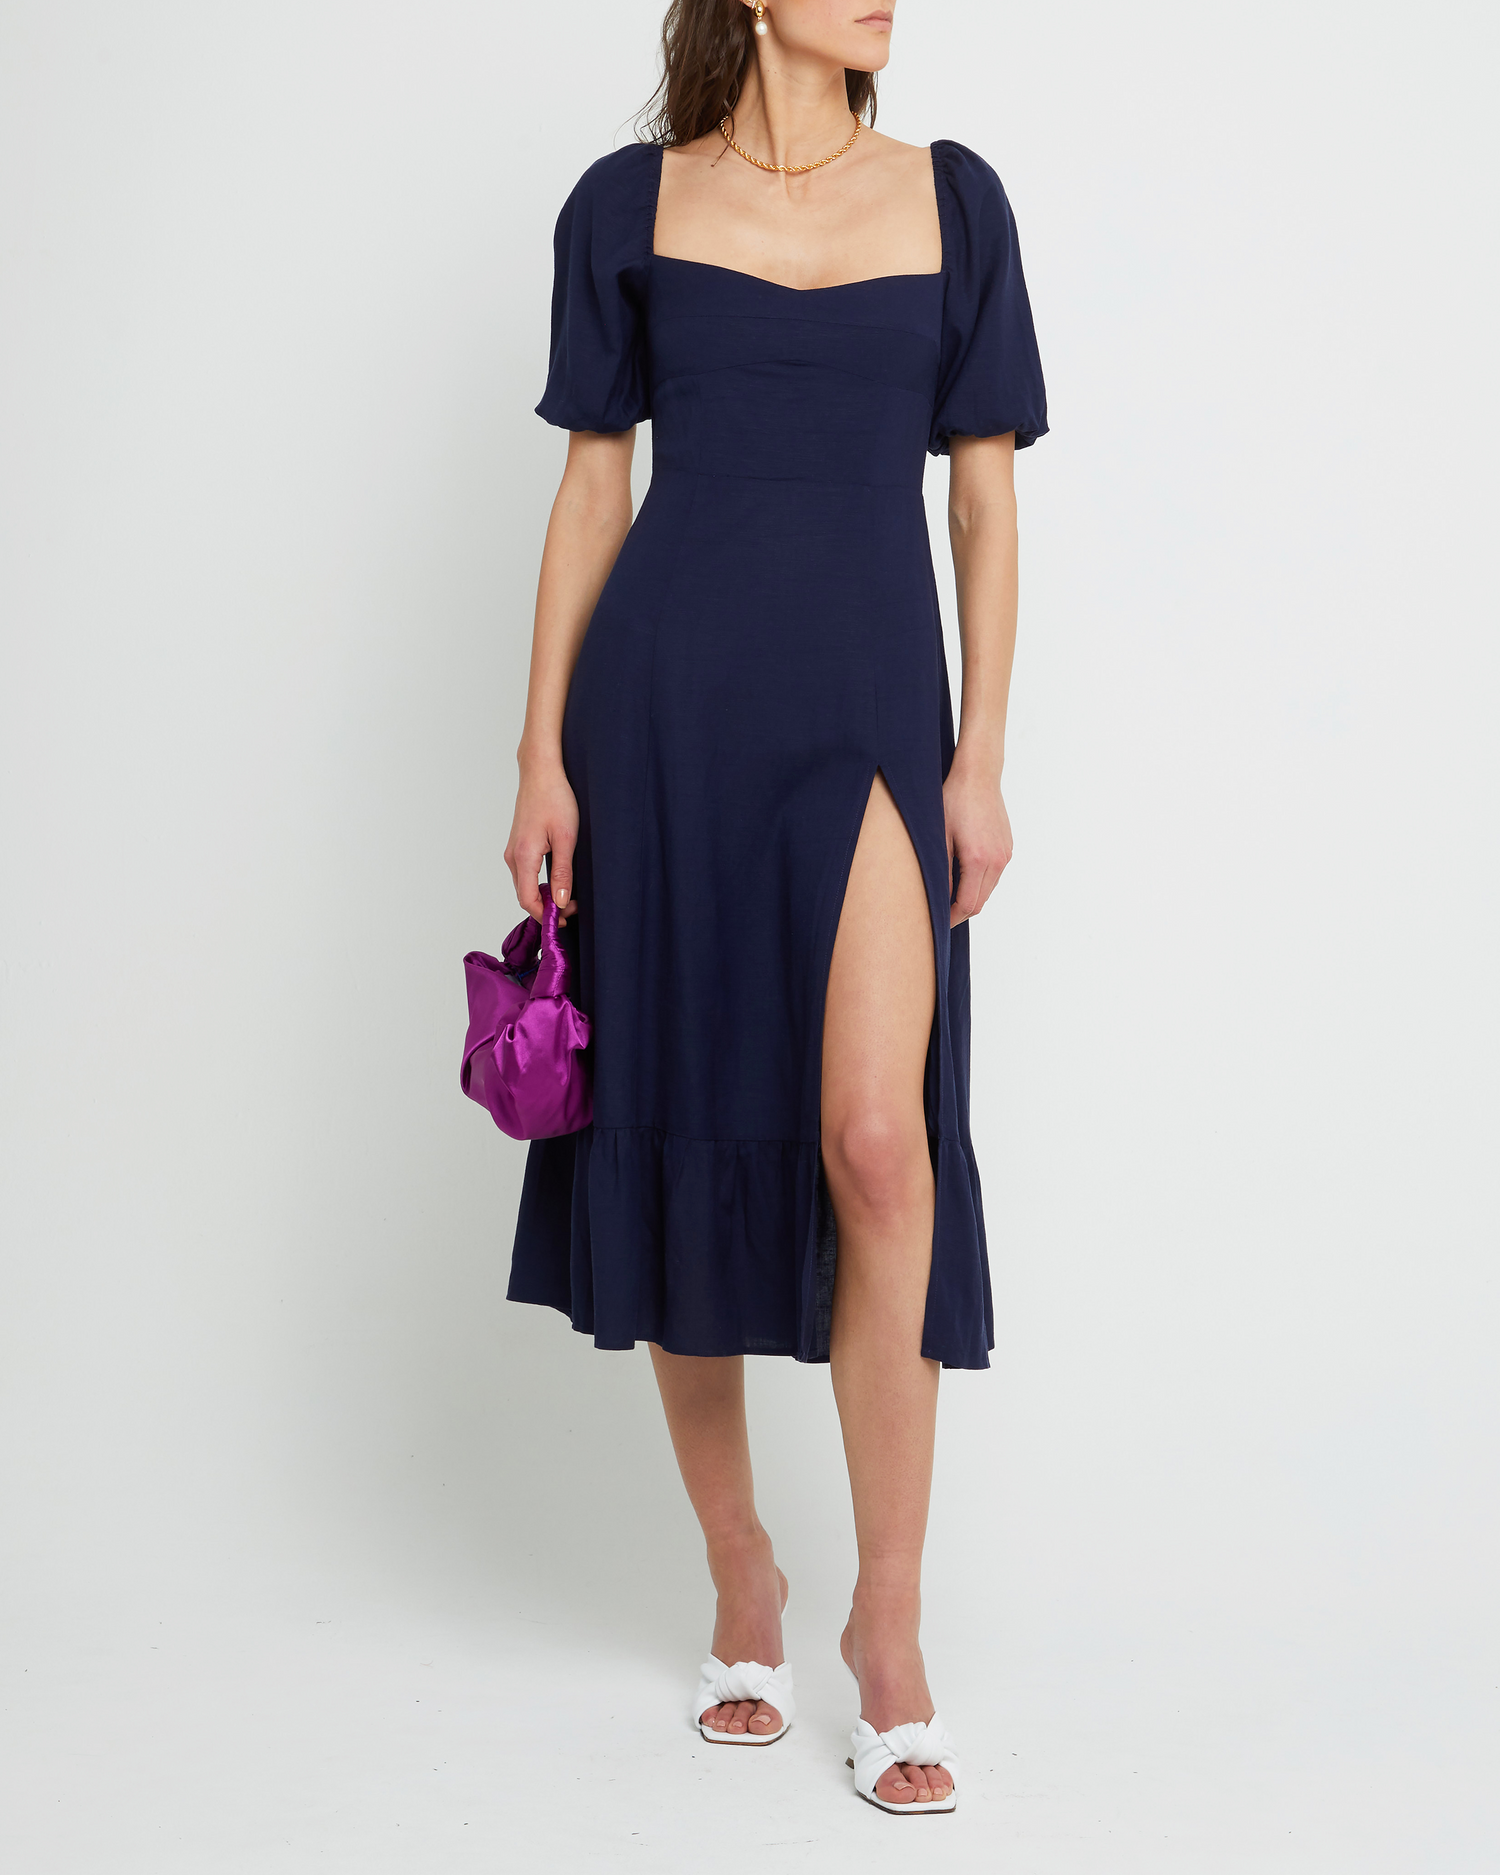 Fourth image of Violetta Midi Dress, a blue midi dress, sweetheart neckline, short sleeves, puff sleeves, side slit